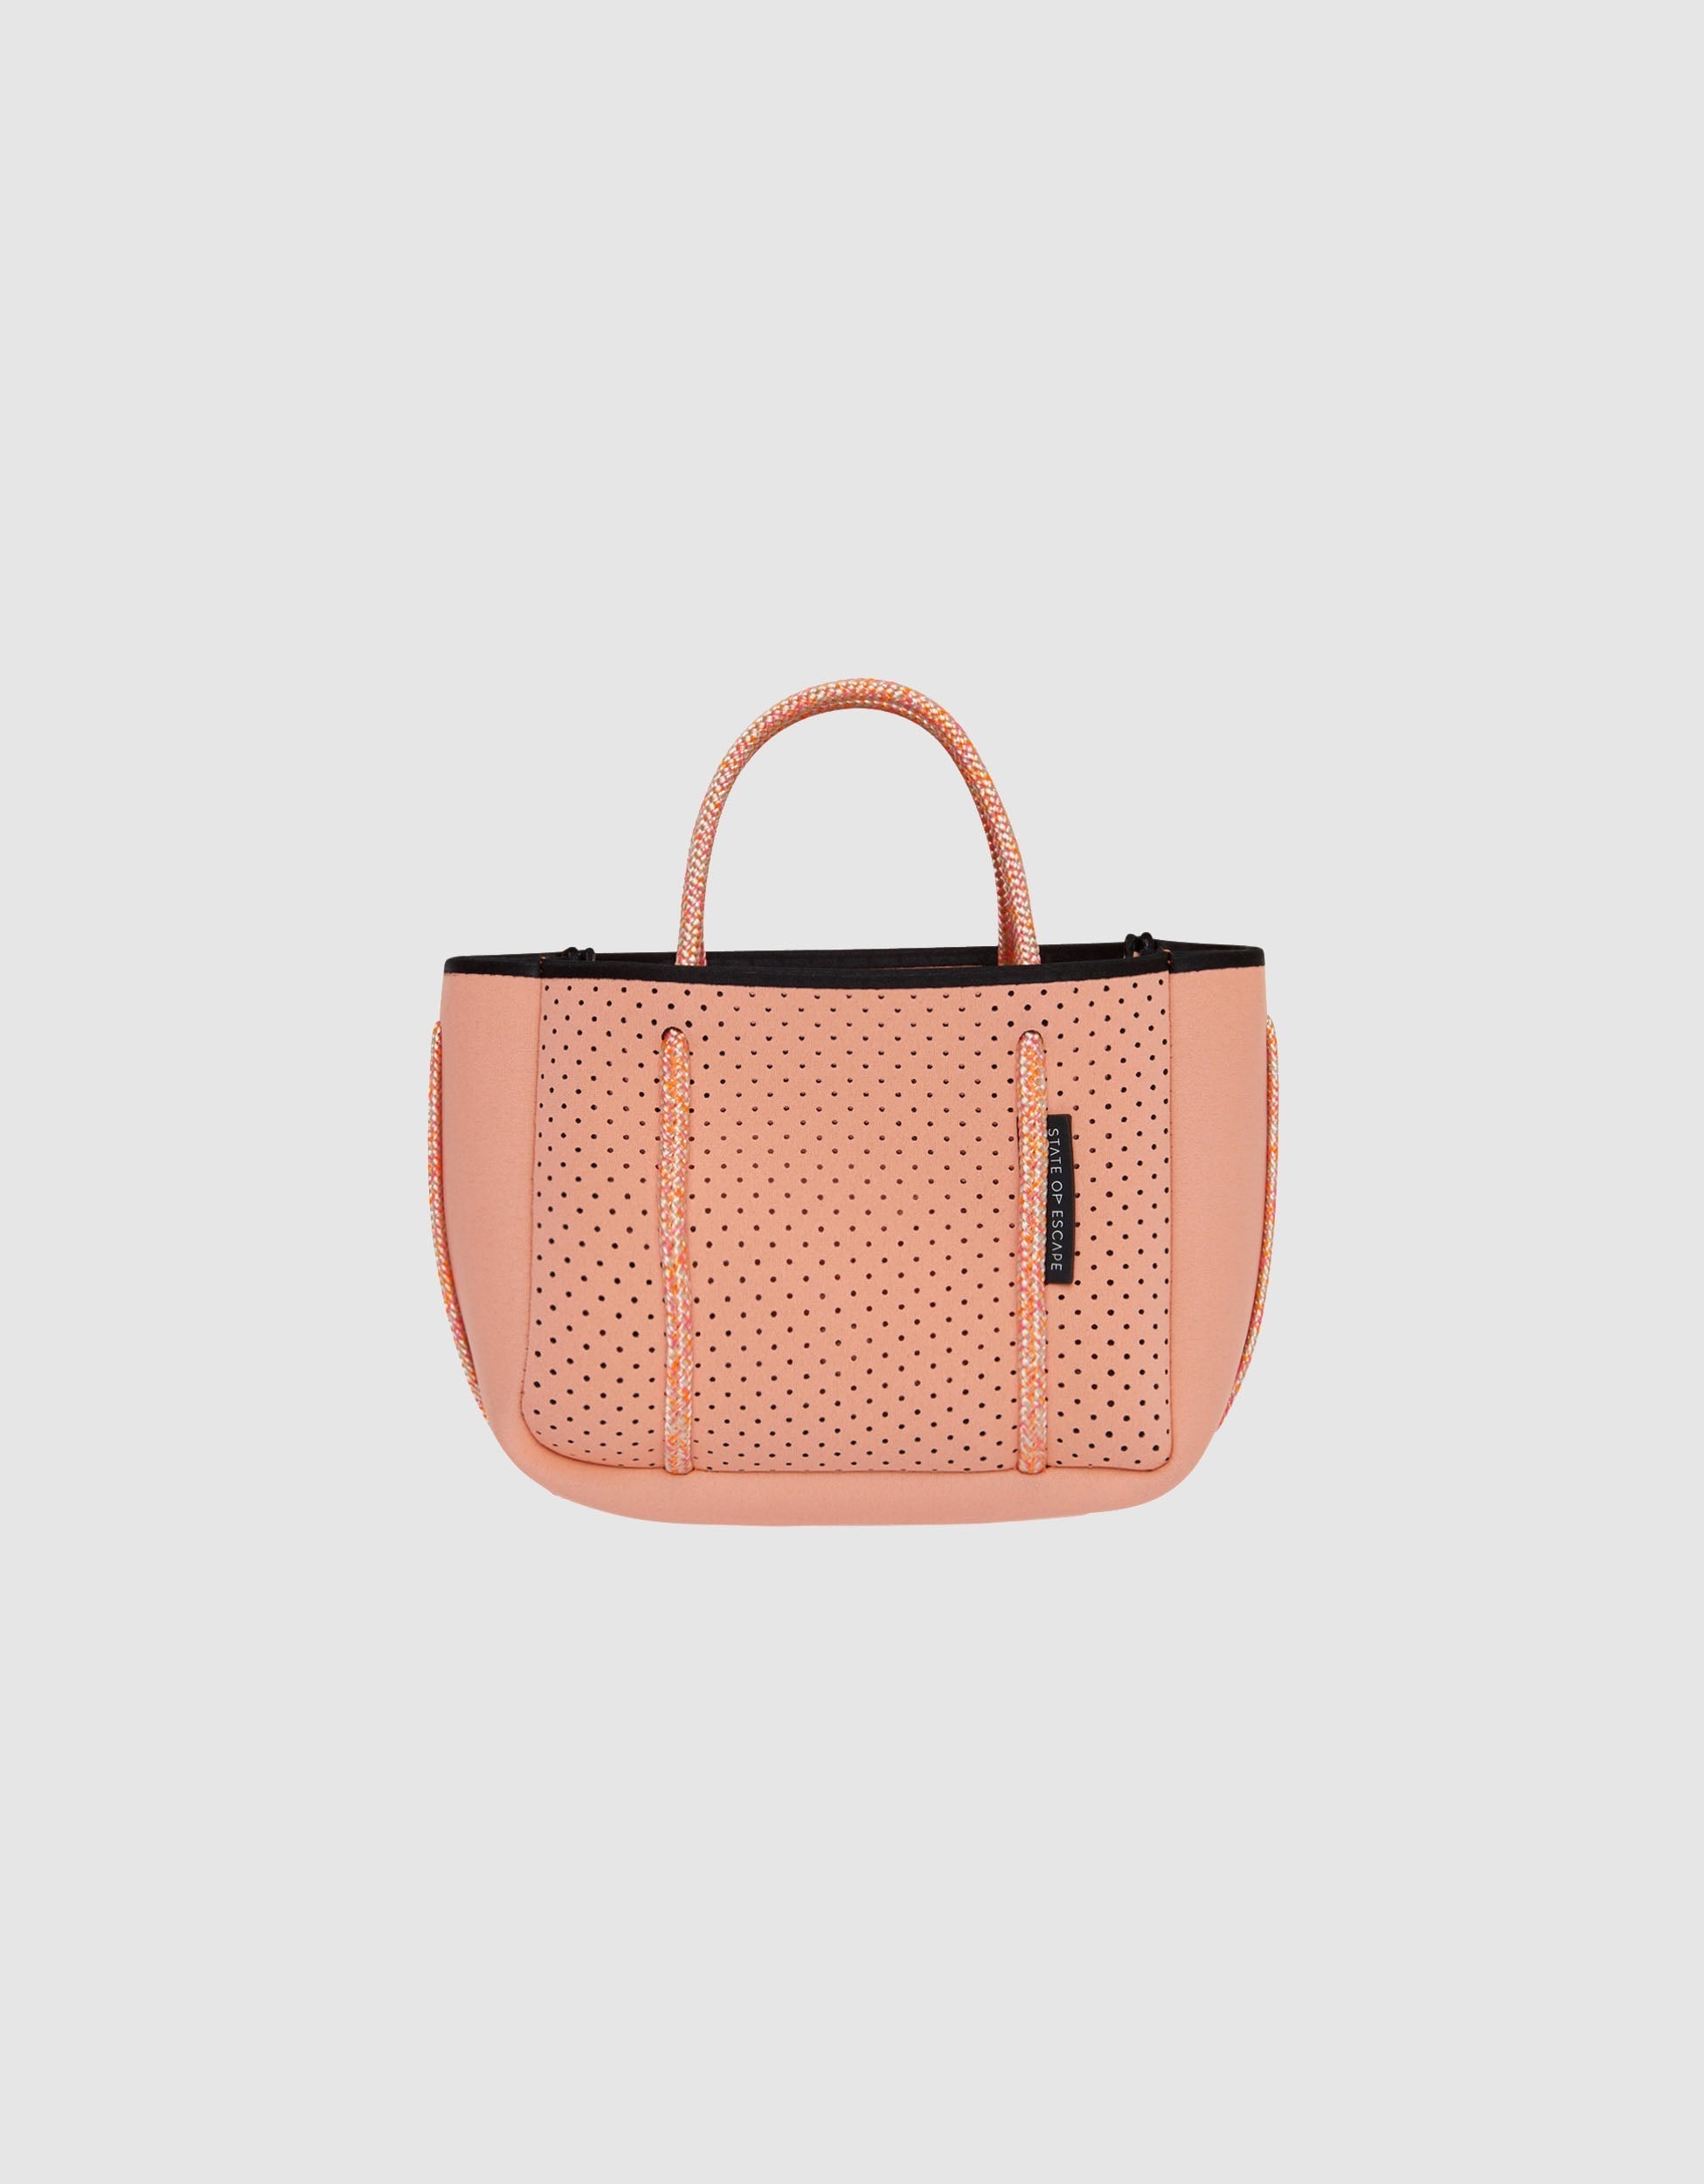 Australian Designer Tote Bags | Small Tote Bags | Micro Collection 